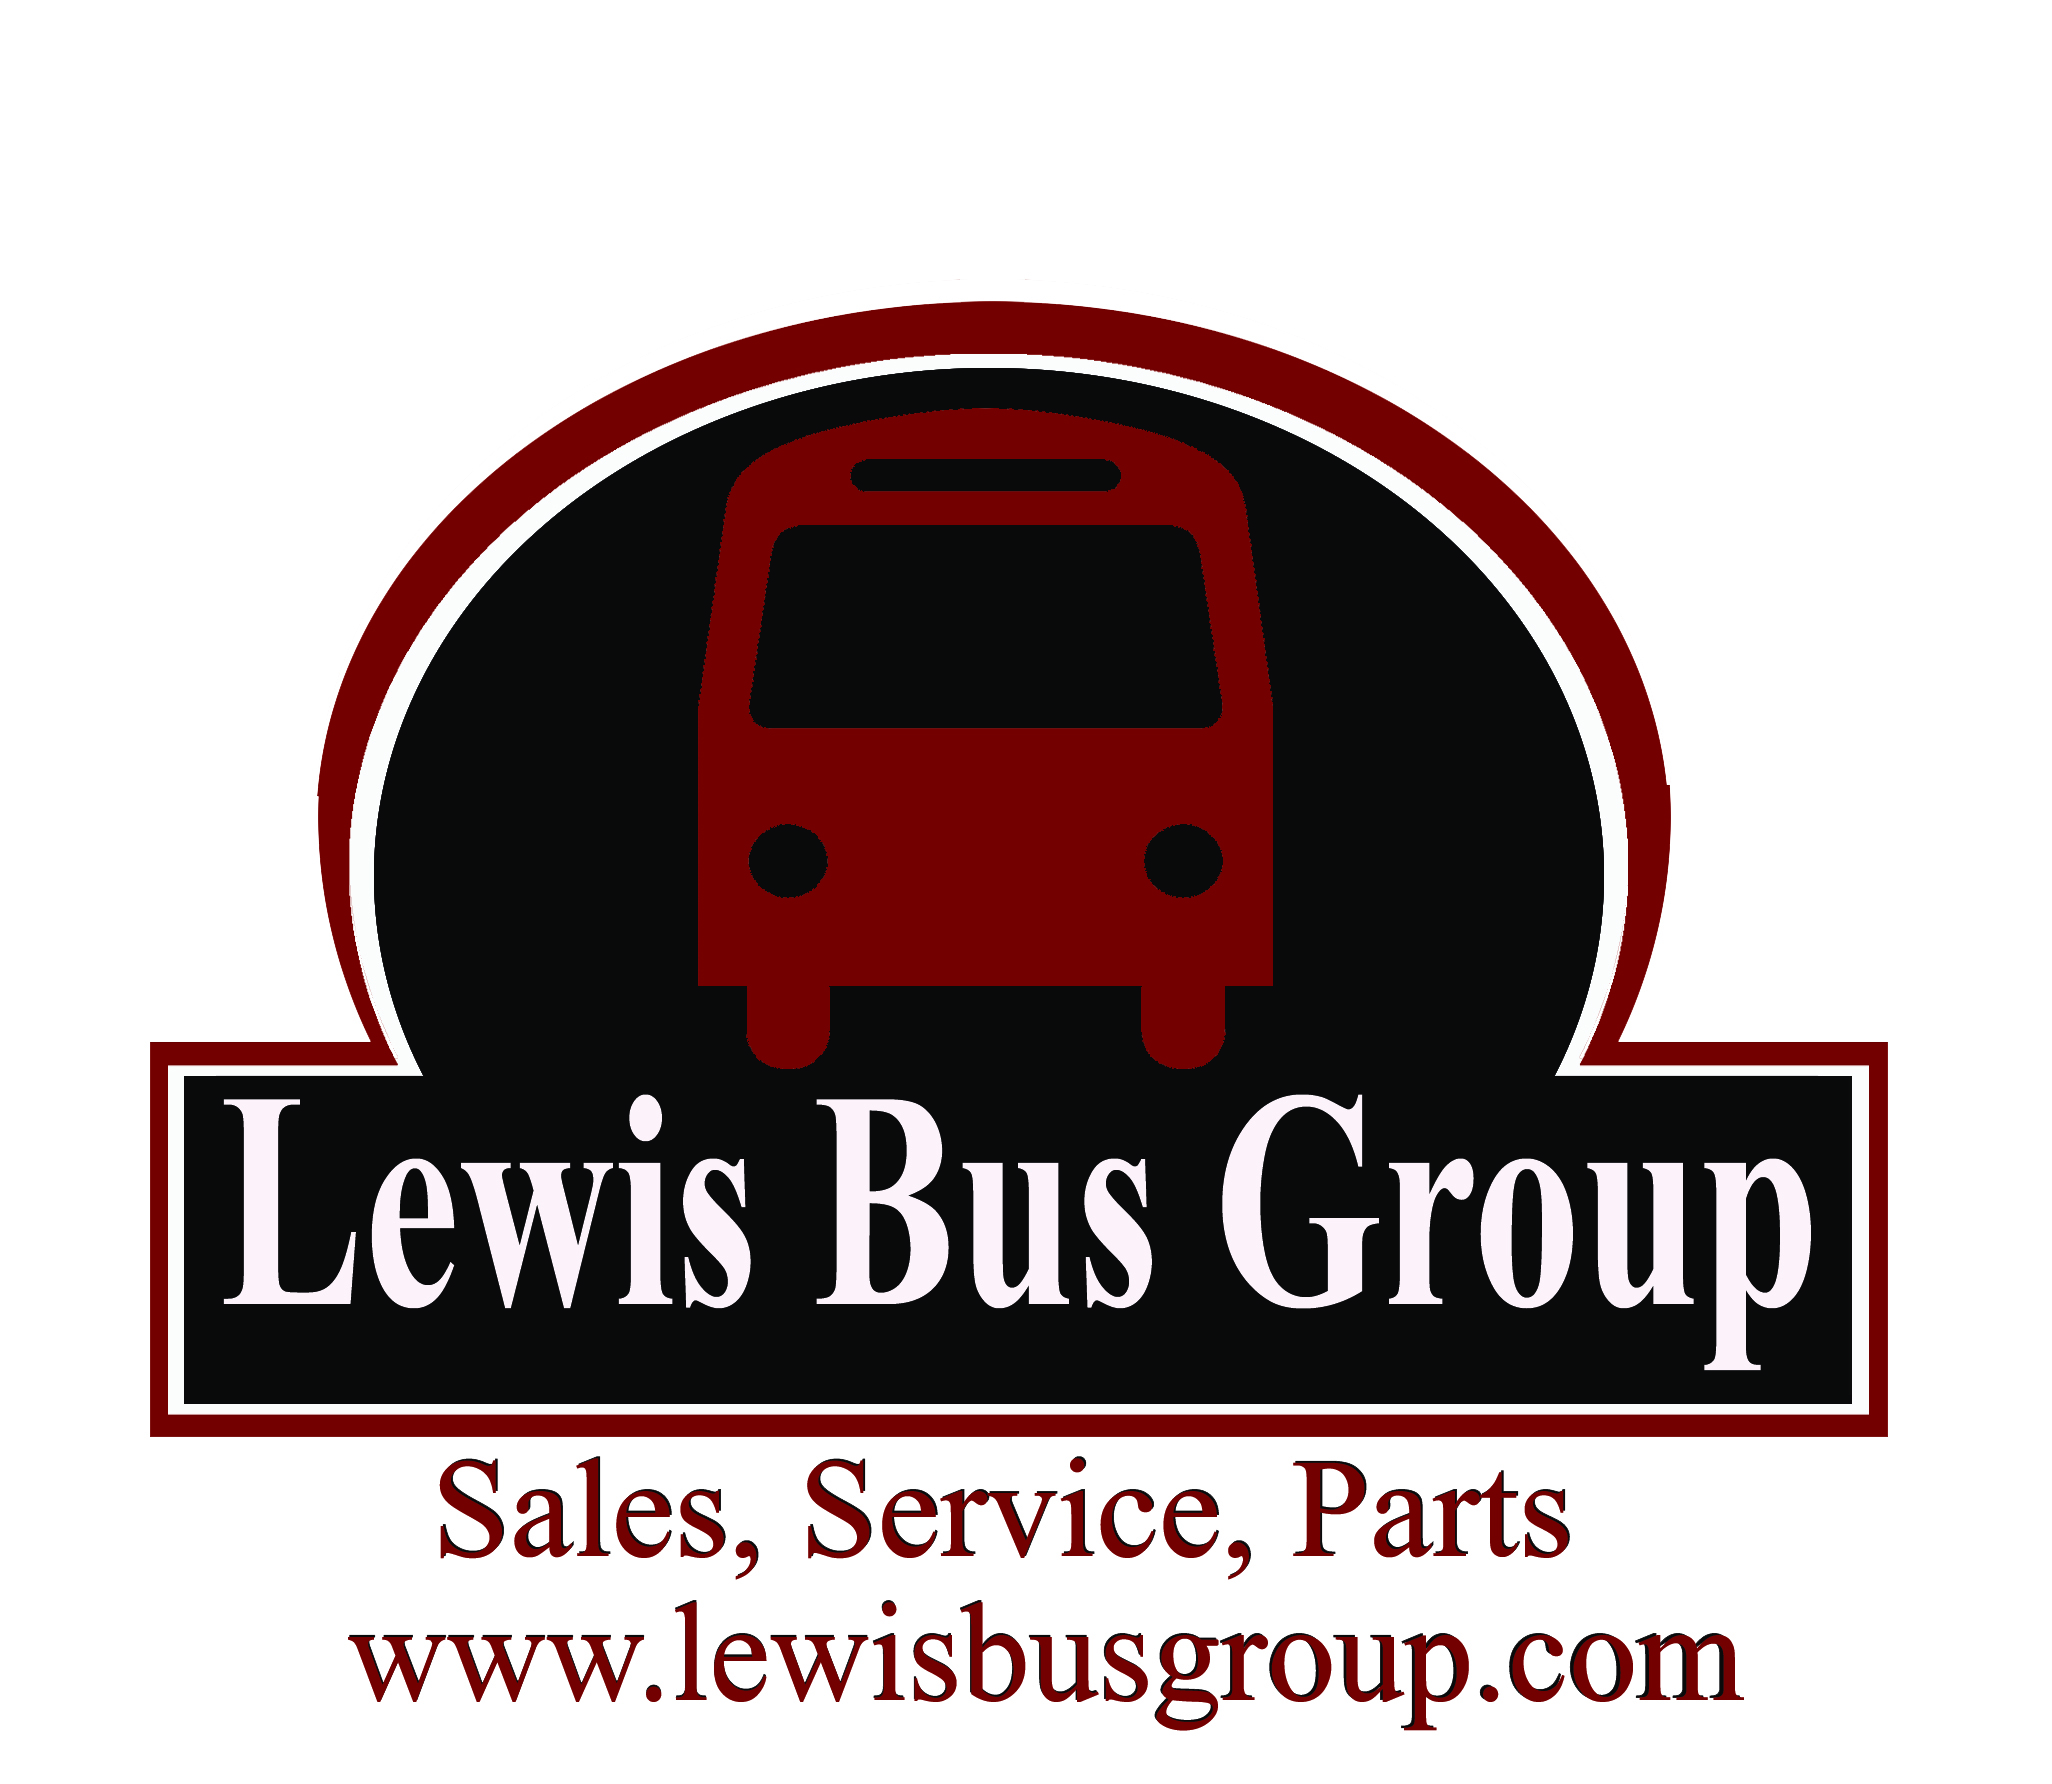 Lewis Bus Group